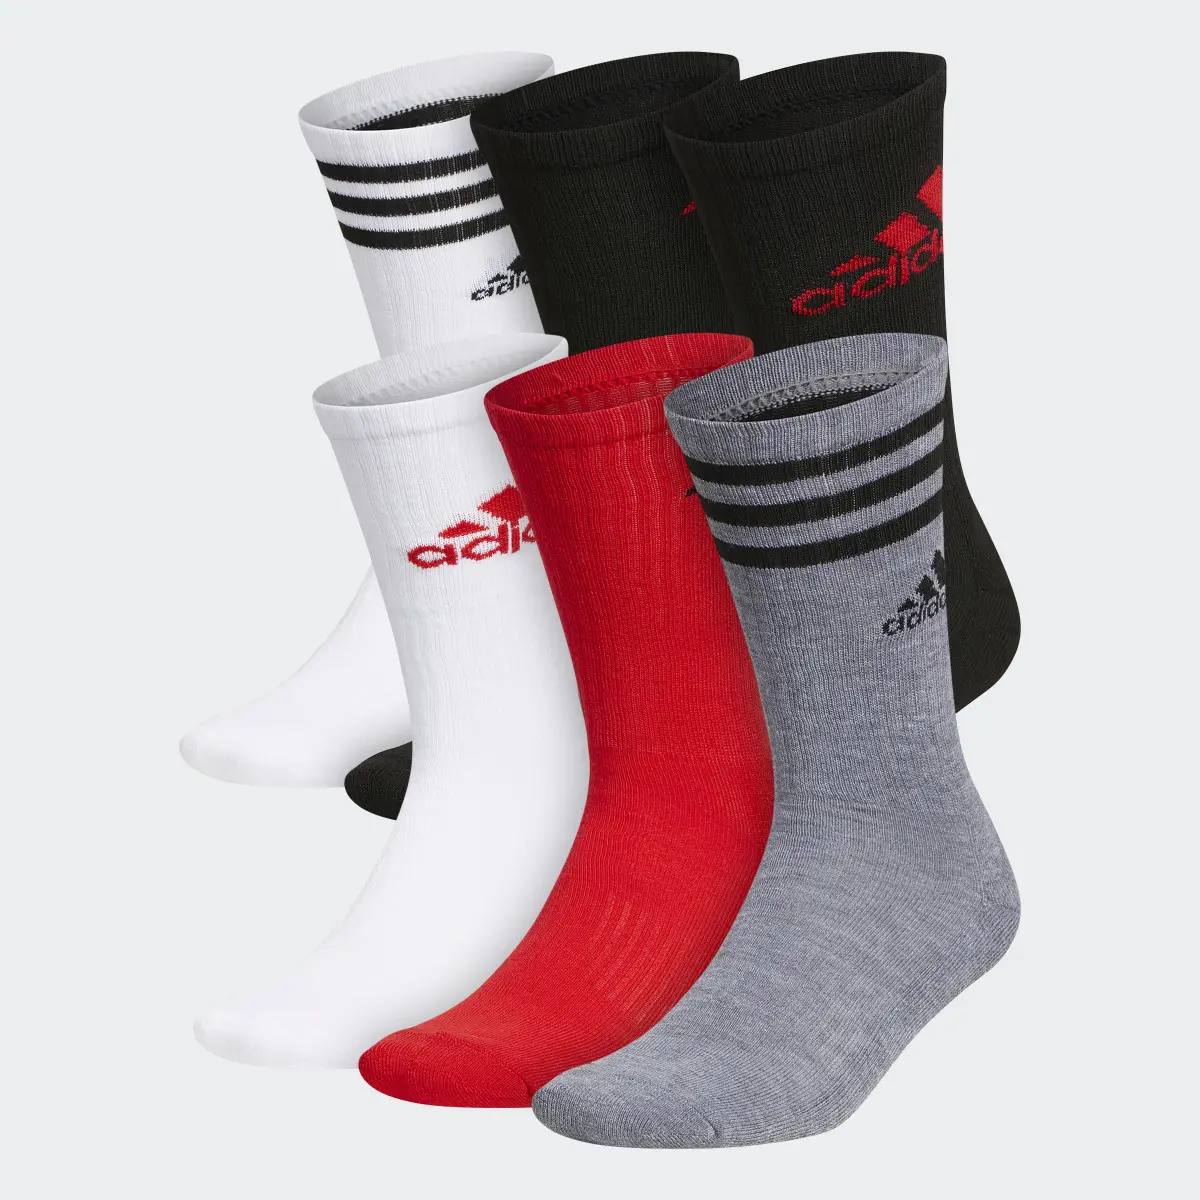 Adidas Cushioned Mixed Crew Socks 6 Pairs. 1